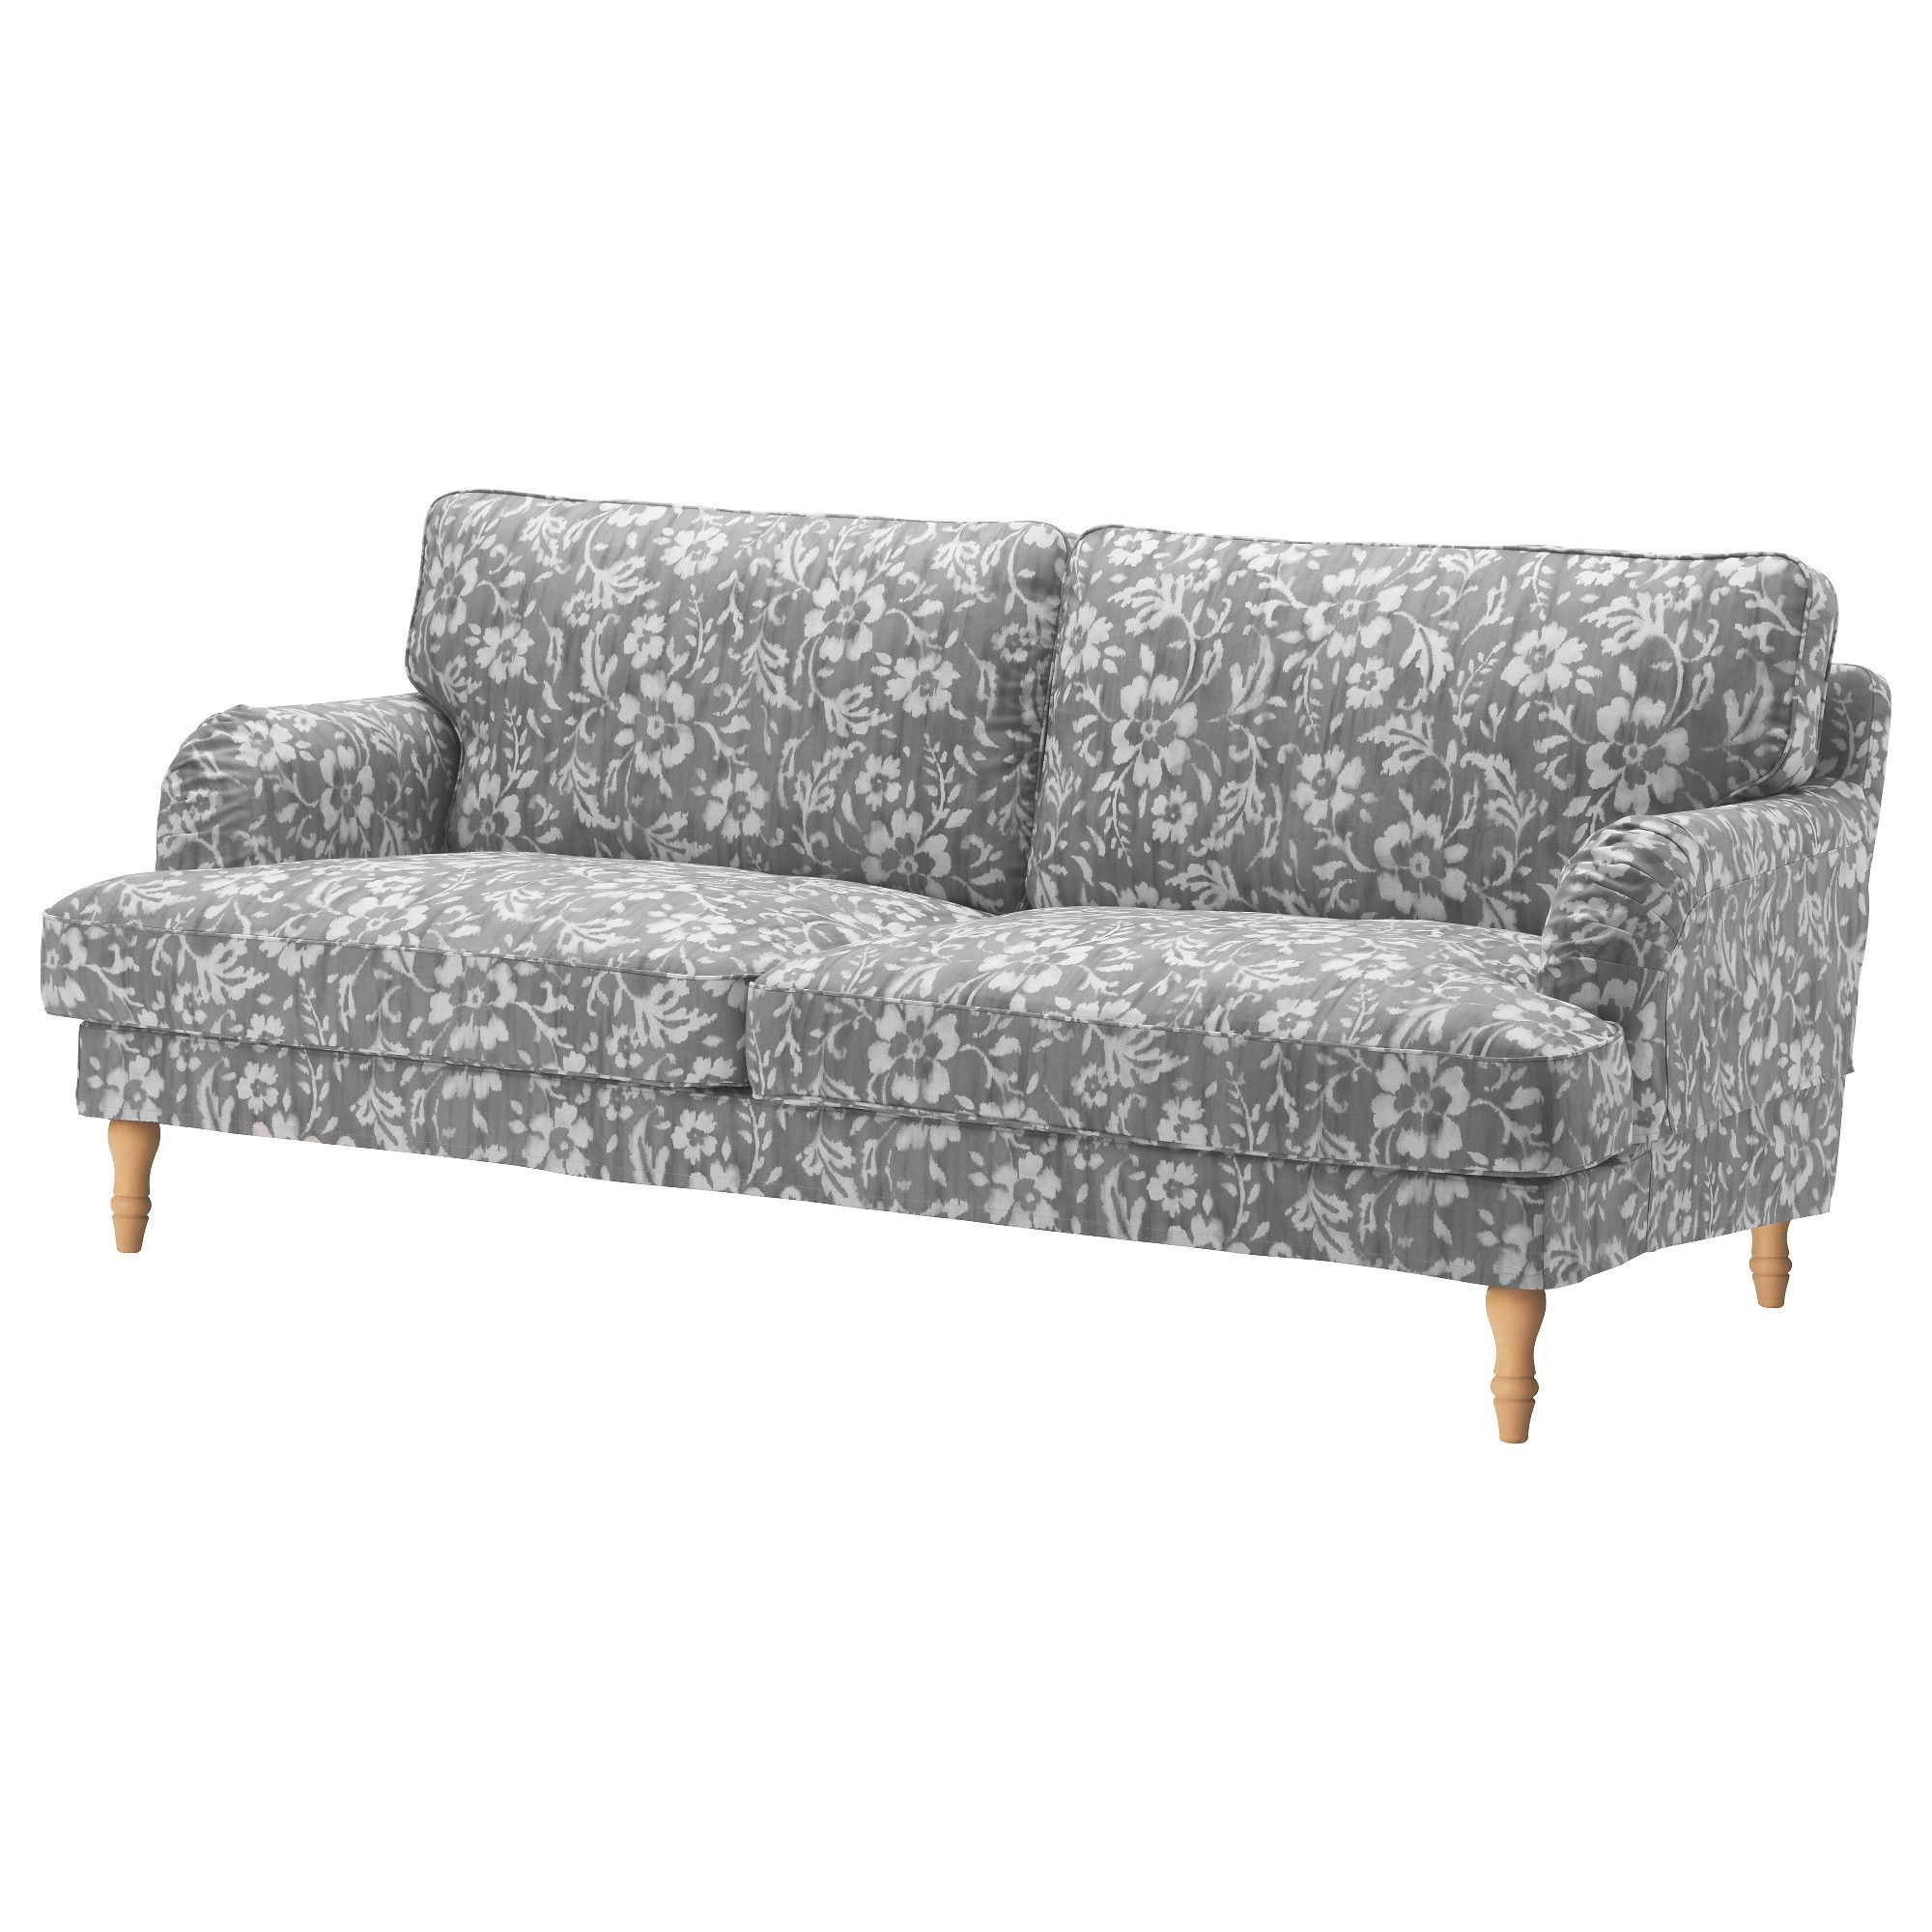 ikea outdoor sofa new couch bett ikea ebenfalls herrlich stocksund 3er sofa hovsten grau of ikea outdoor sofa